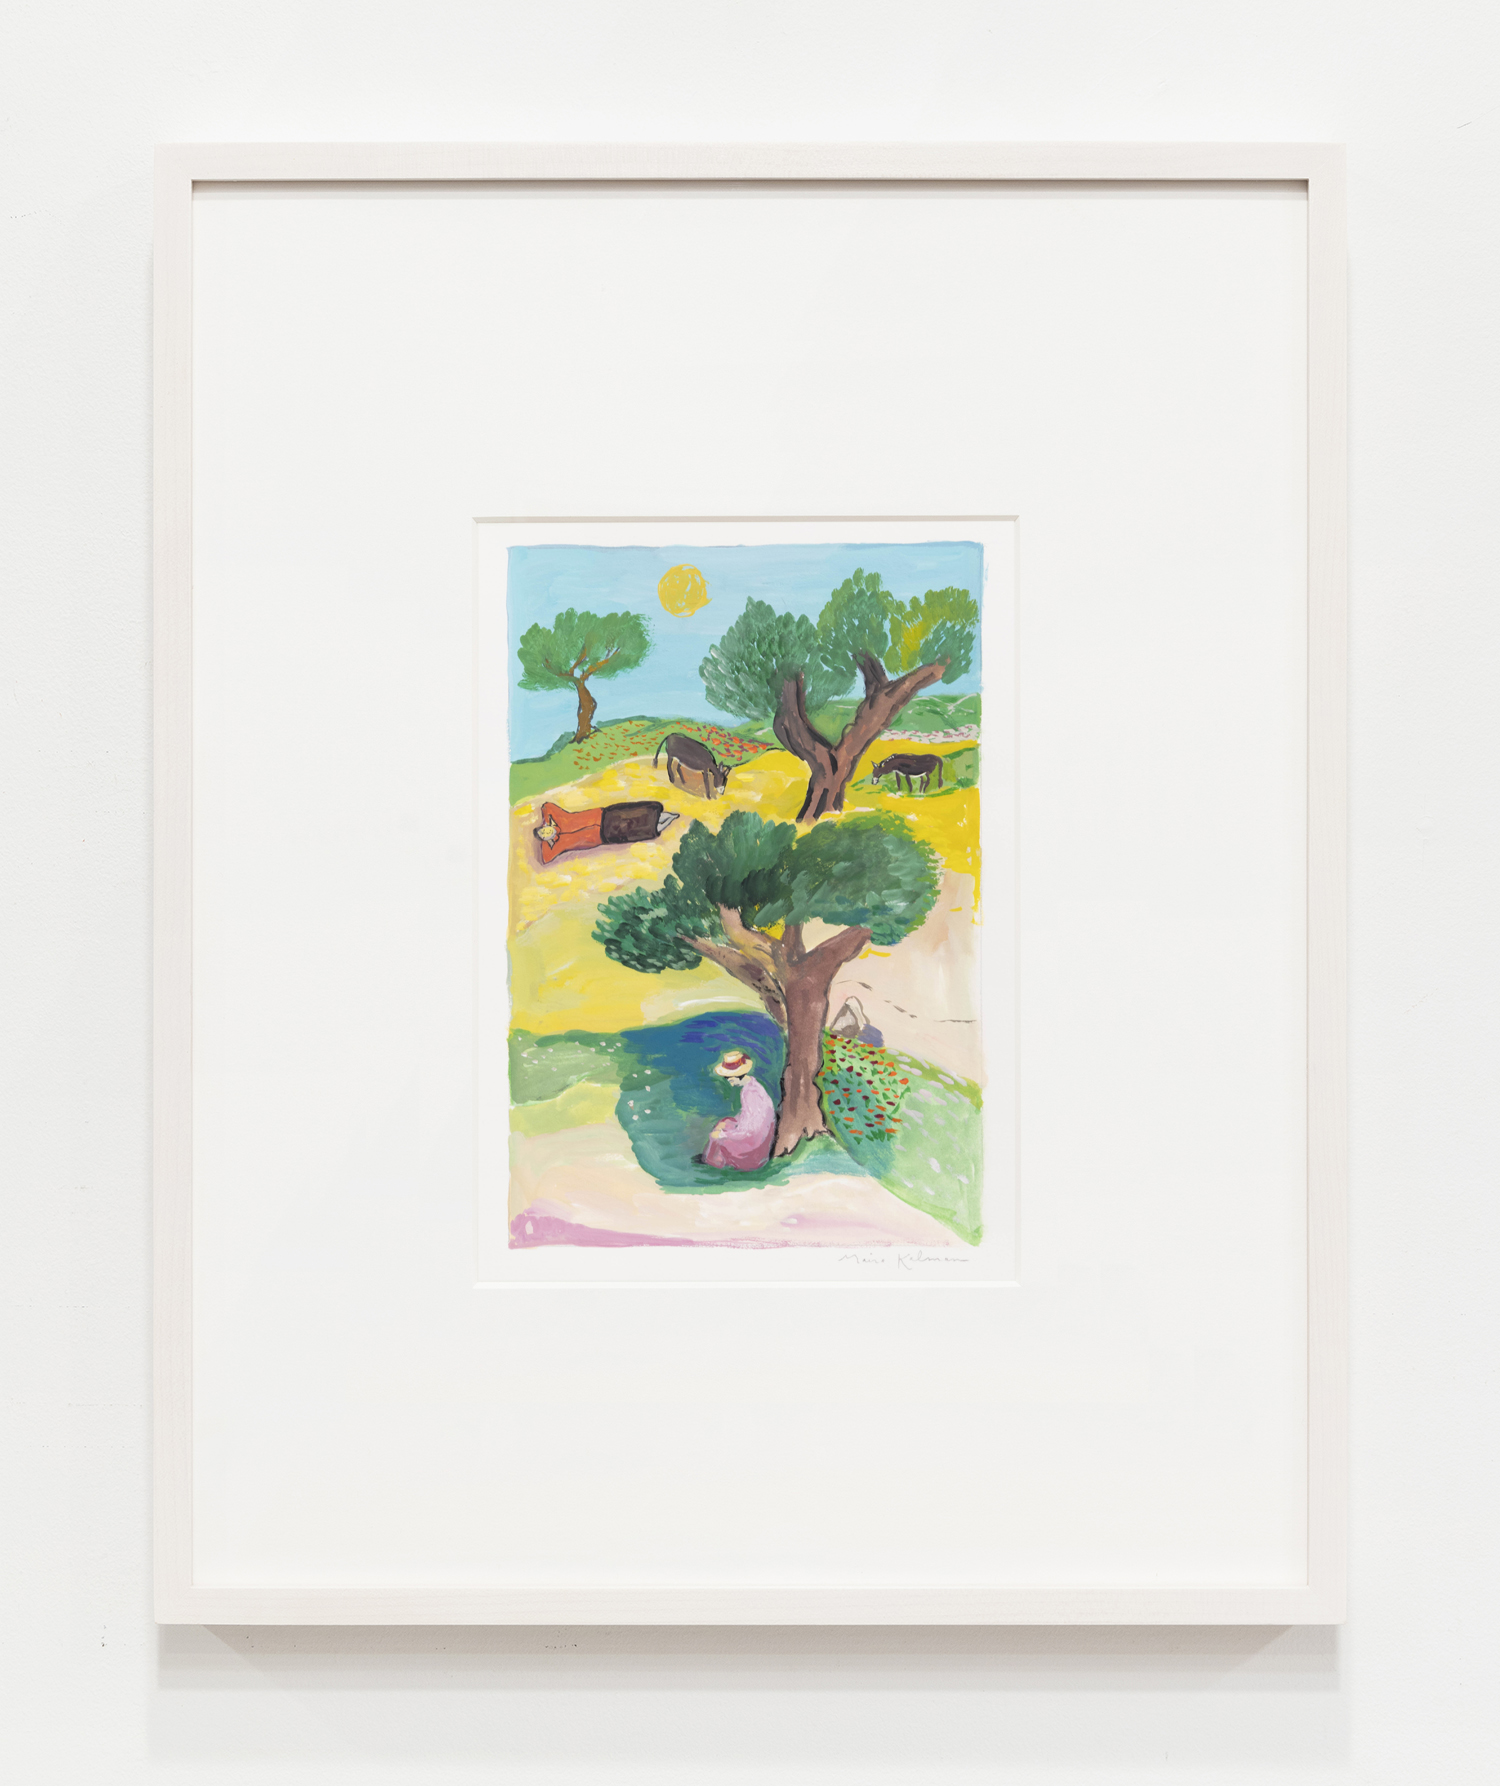 Maira Kalman Gertrude Sleeping Under a Tree, 2019 Gouache Image Dimensions: 9 1/8 x 6 inches (23.2 x 15.2 cm) Paper Dimensions: 14 1/8 x 11 1/8 inches (35.9 x 28.3 cm)